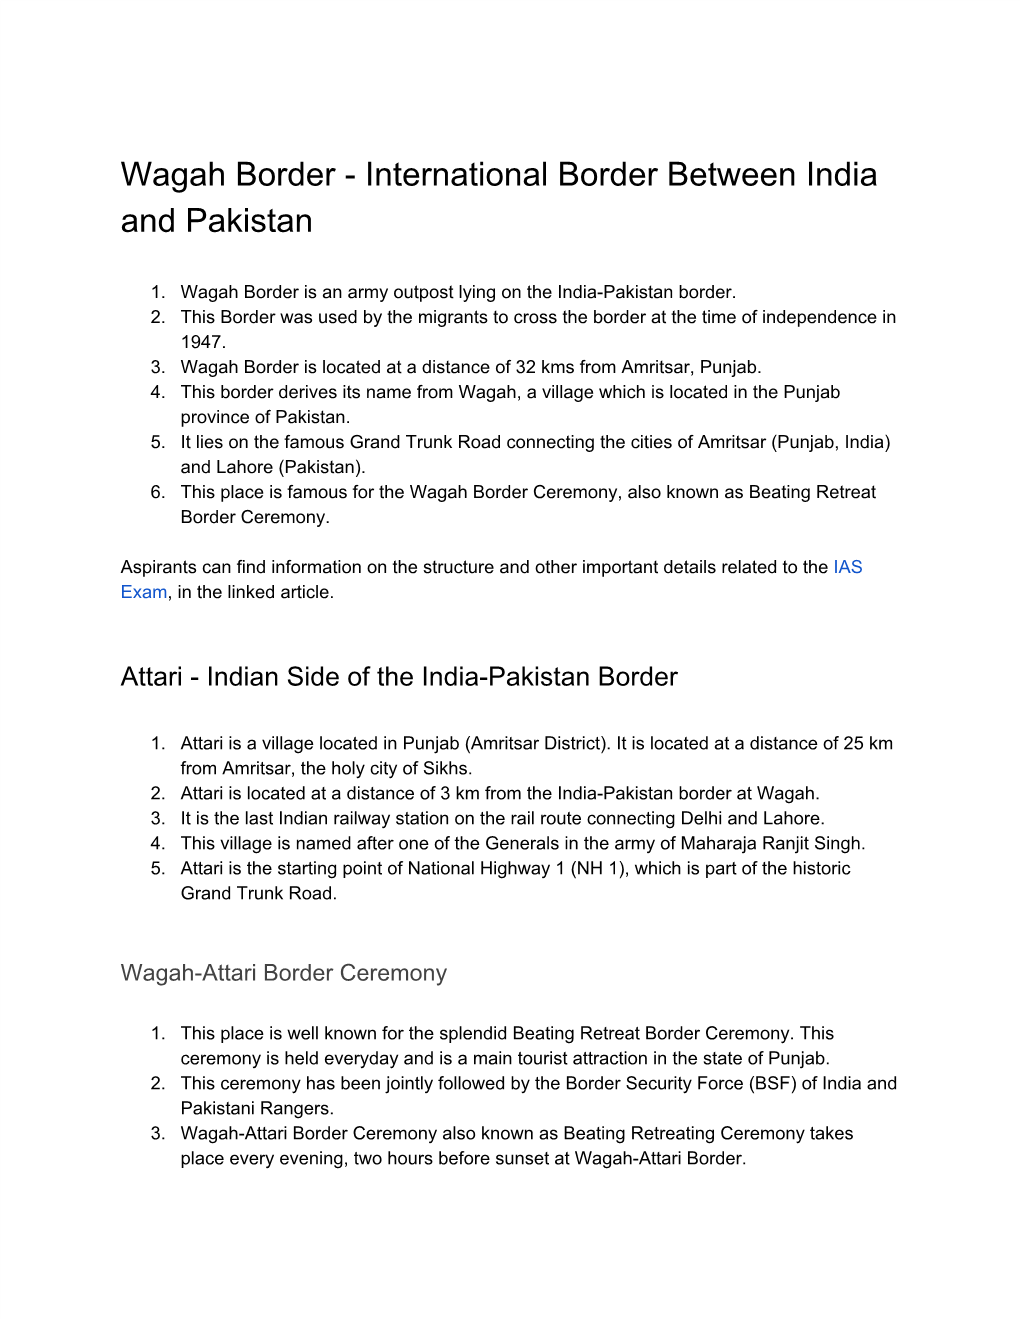 Wagah Border - International Border Between India and Pakistan